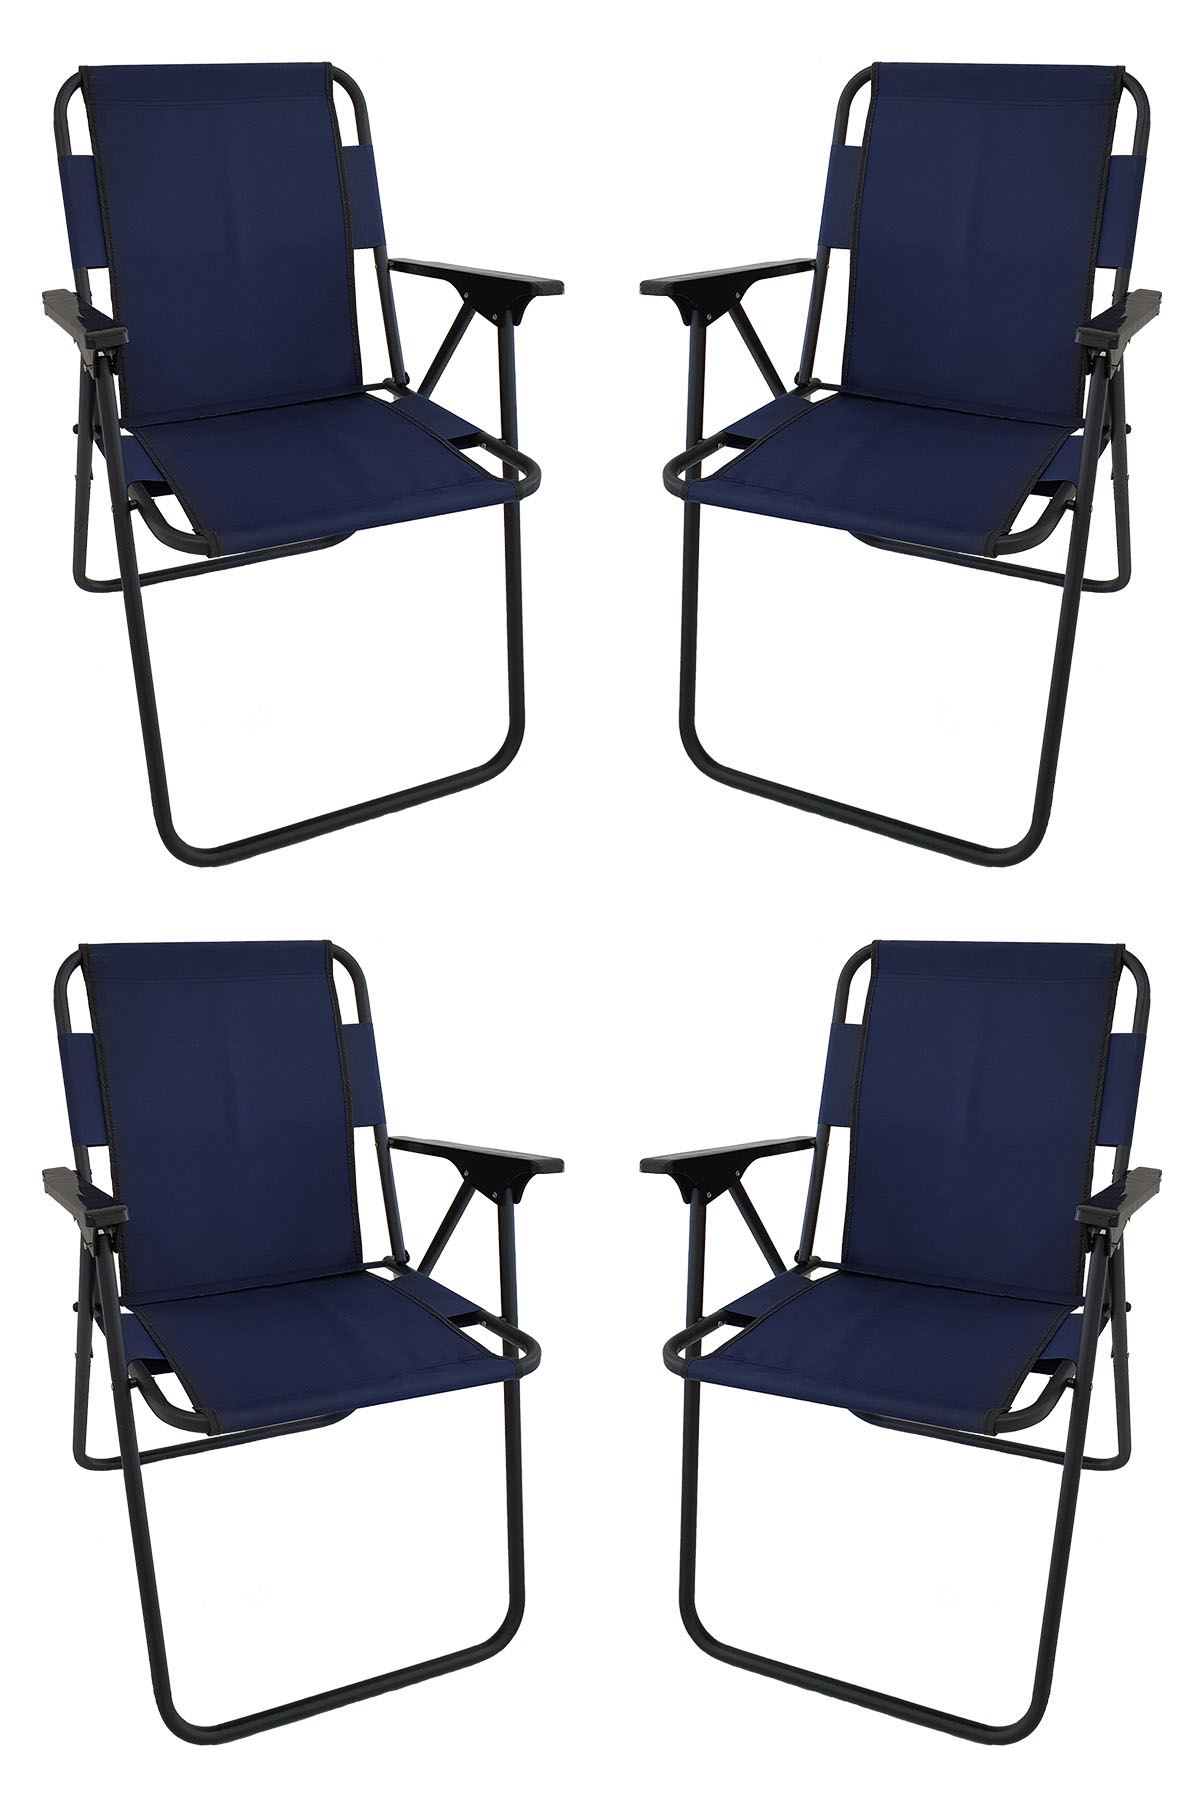 Bofigo 60X80 Pine Patterned Folding Table + 4 Pieces Folding Chair Camping Set Garden Set Navy Blue